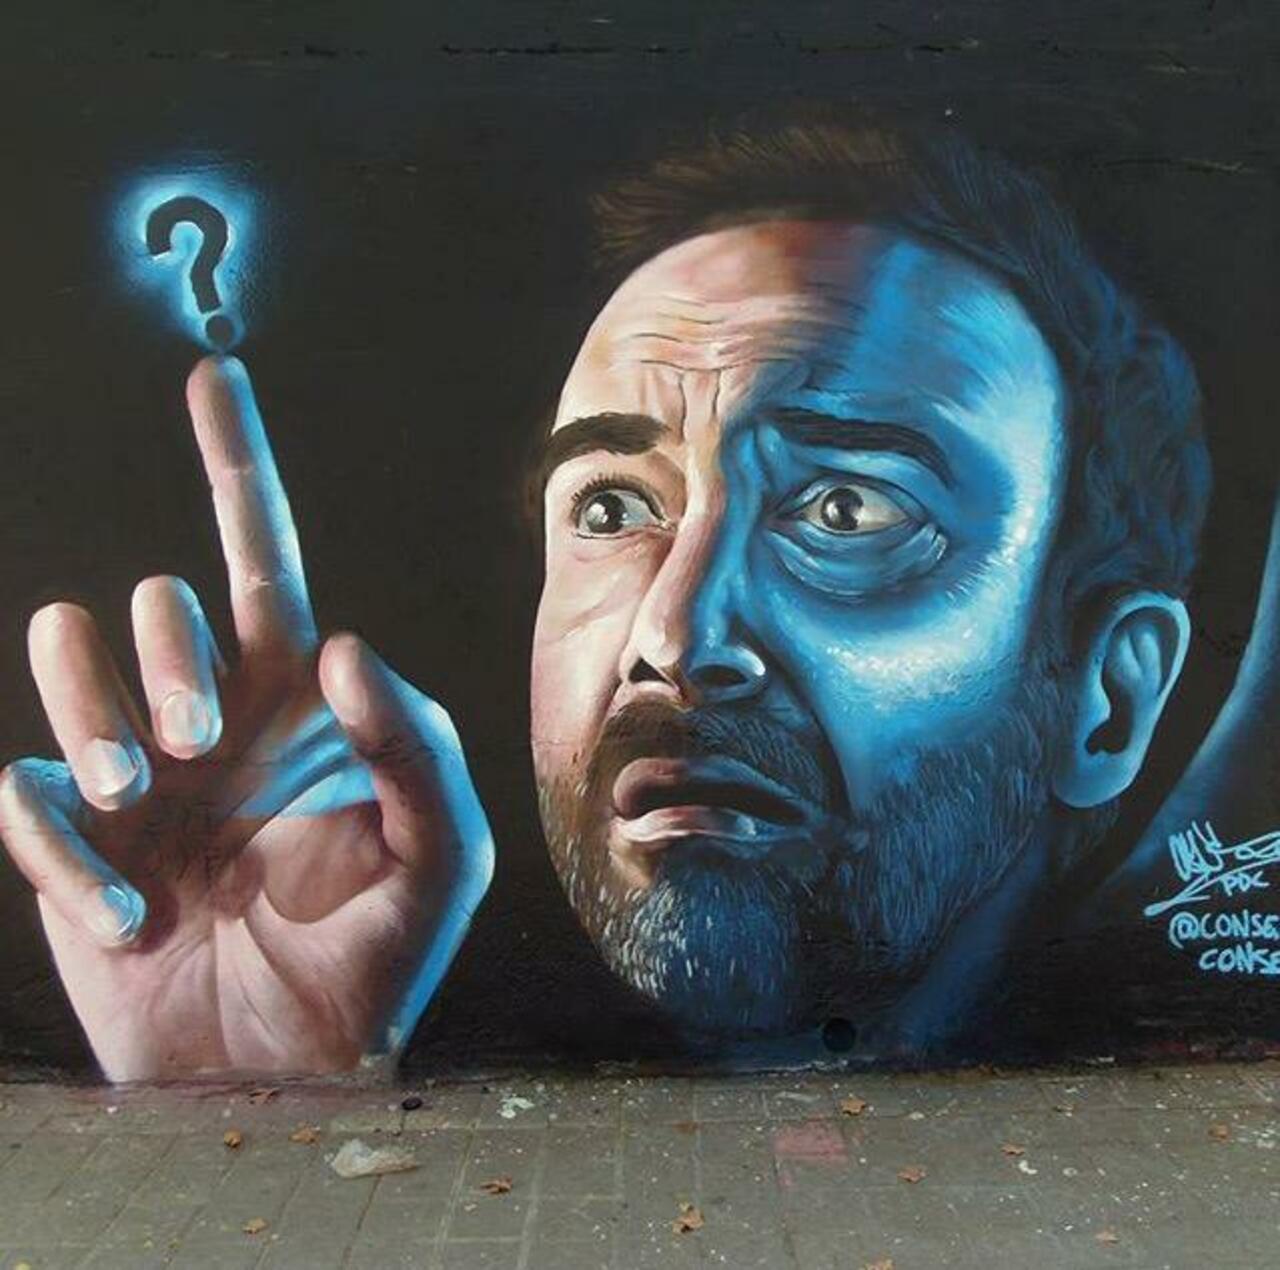 RT belilac "New Street Art by Conse

#art #graffiti #mural #streetart http://t.co/T2HZn9Etn9"